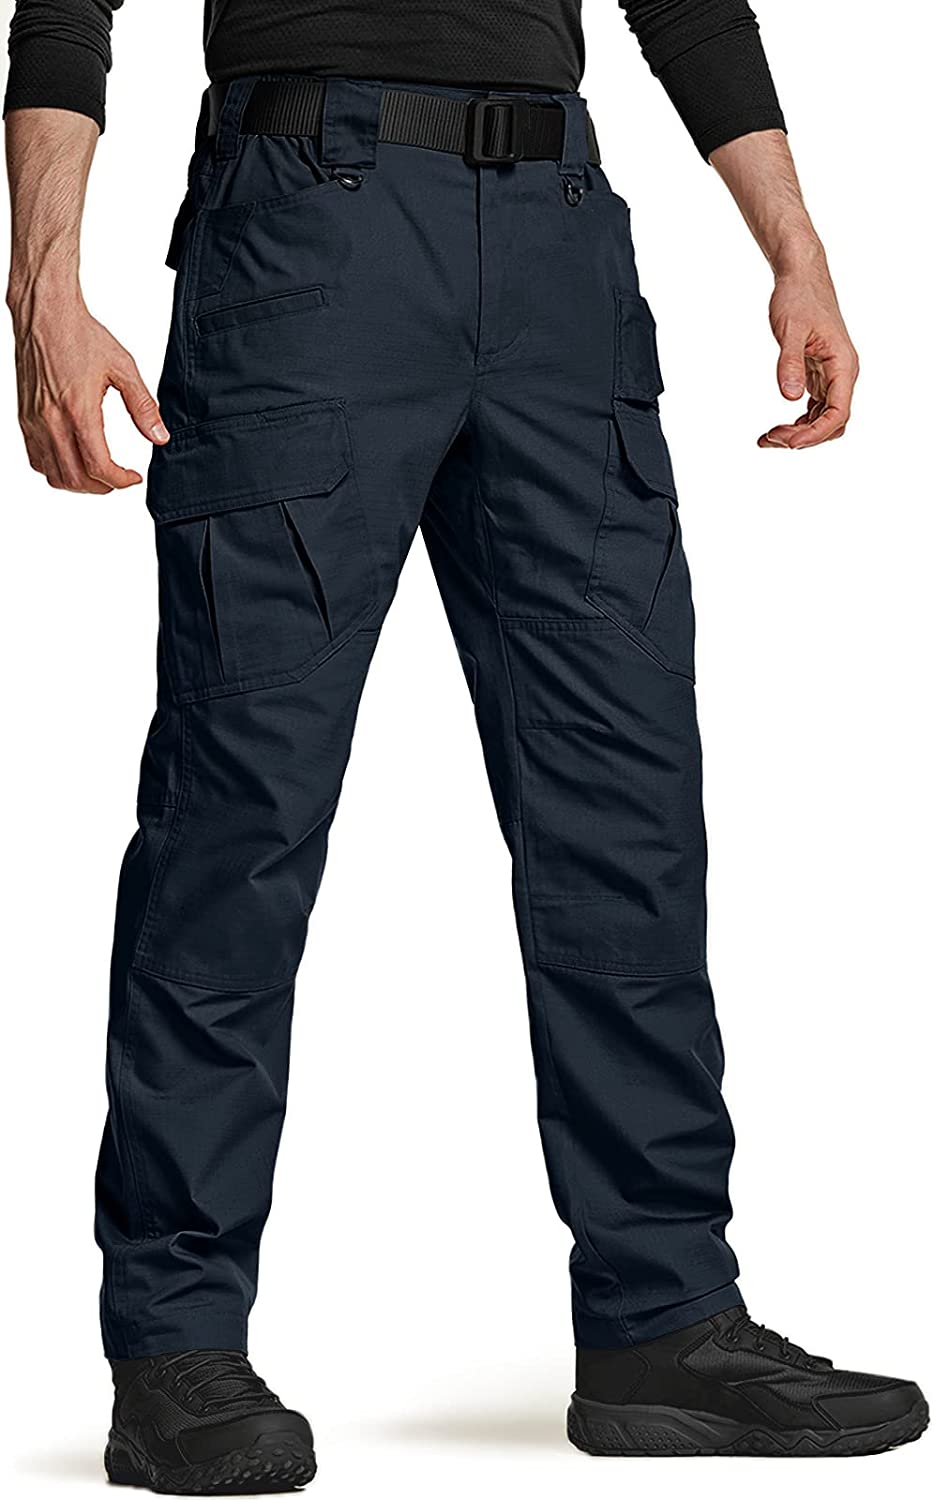 CQR Men's Tactical Pants, Water Repellent Ripstop Cargo Pants